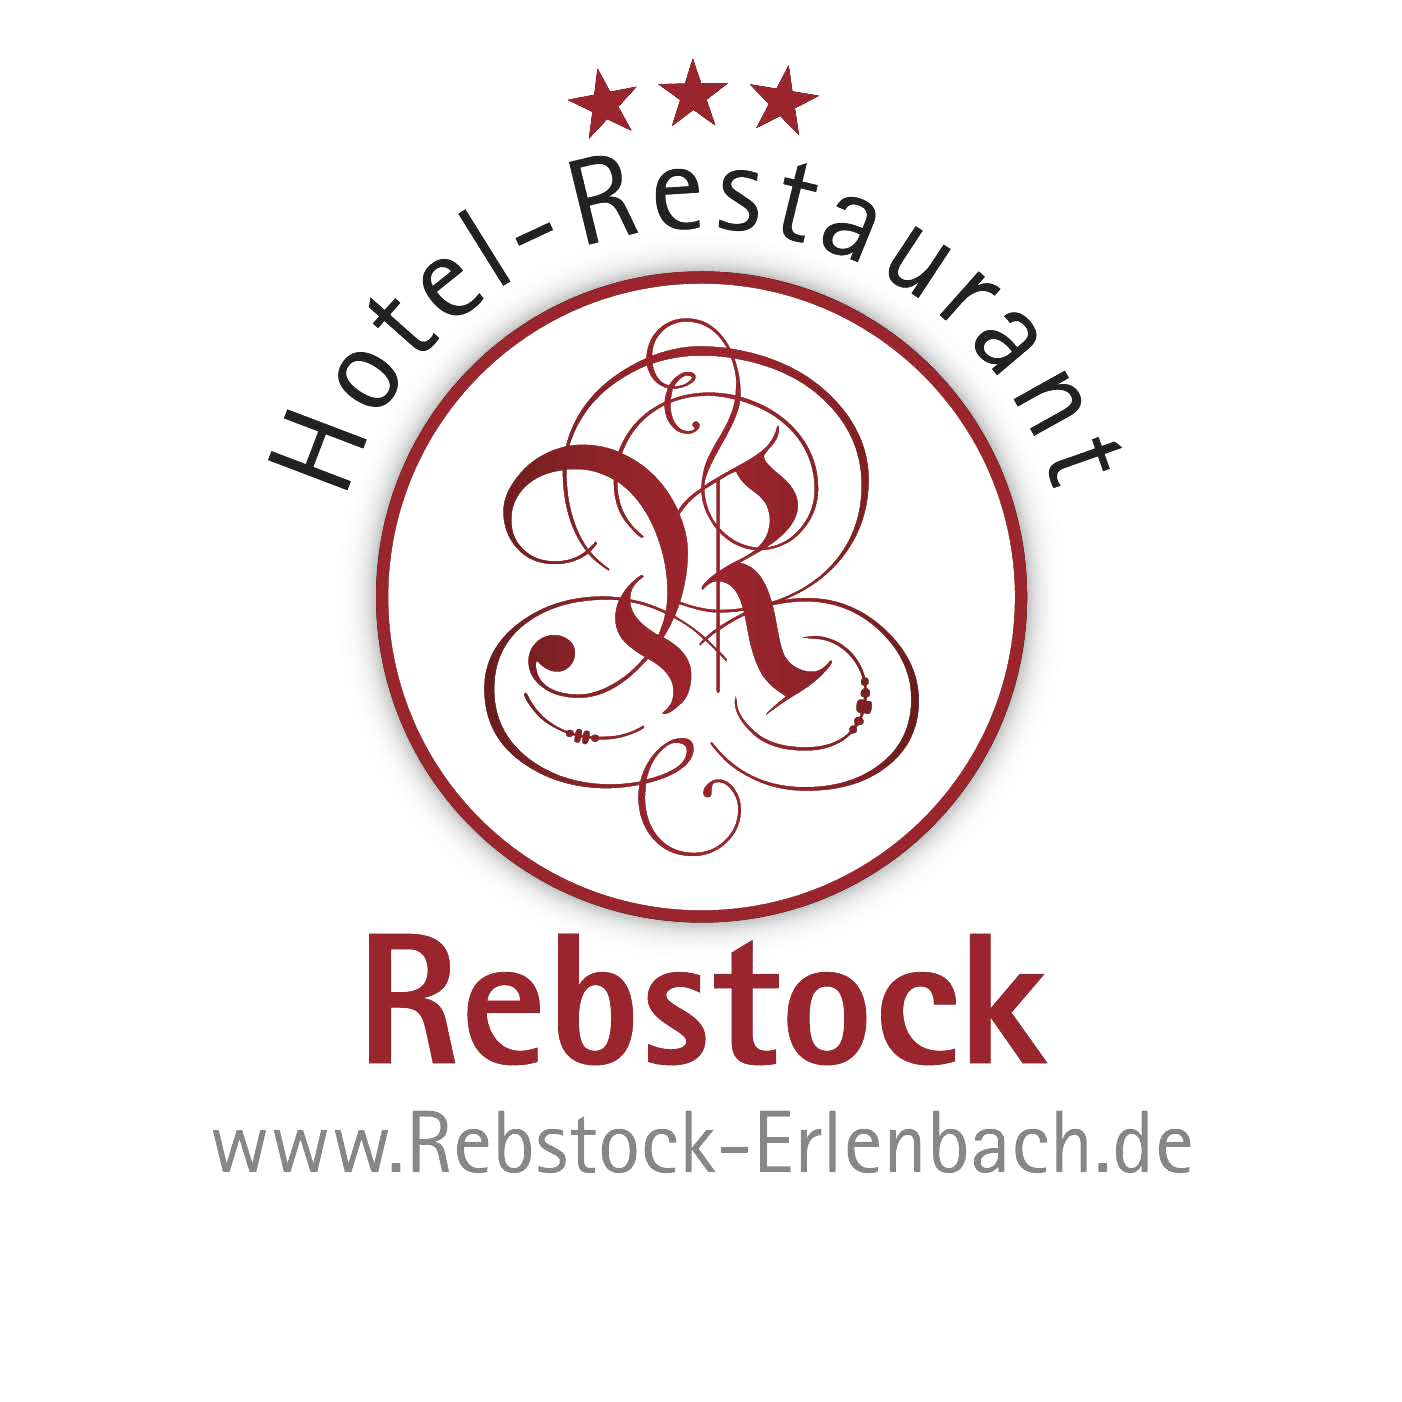 Hotel Restaurant Rebstock in Erlenbach Kreis Heilbronn am Neckar - Logo